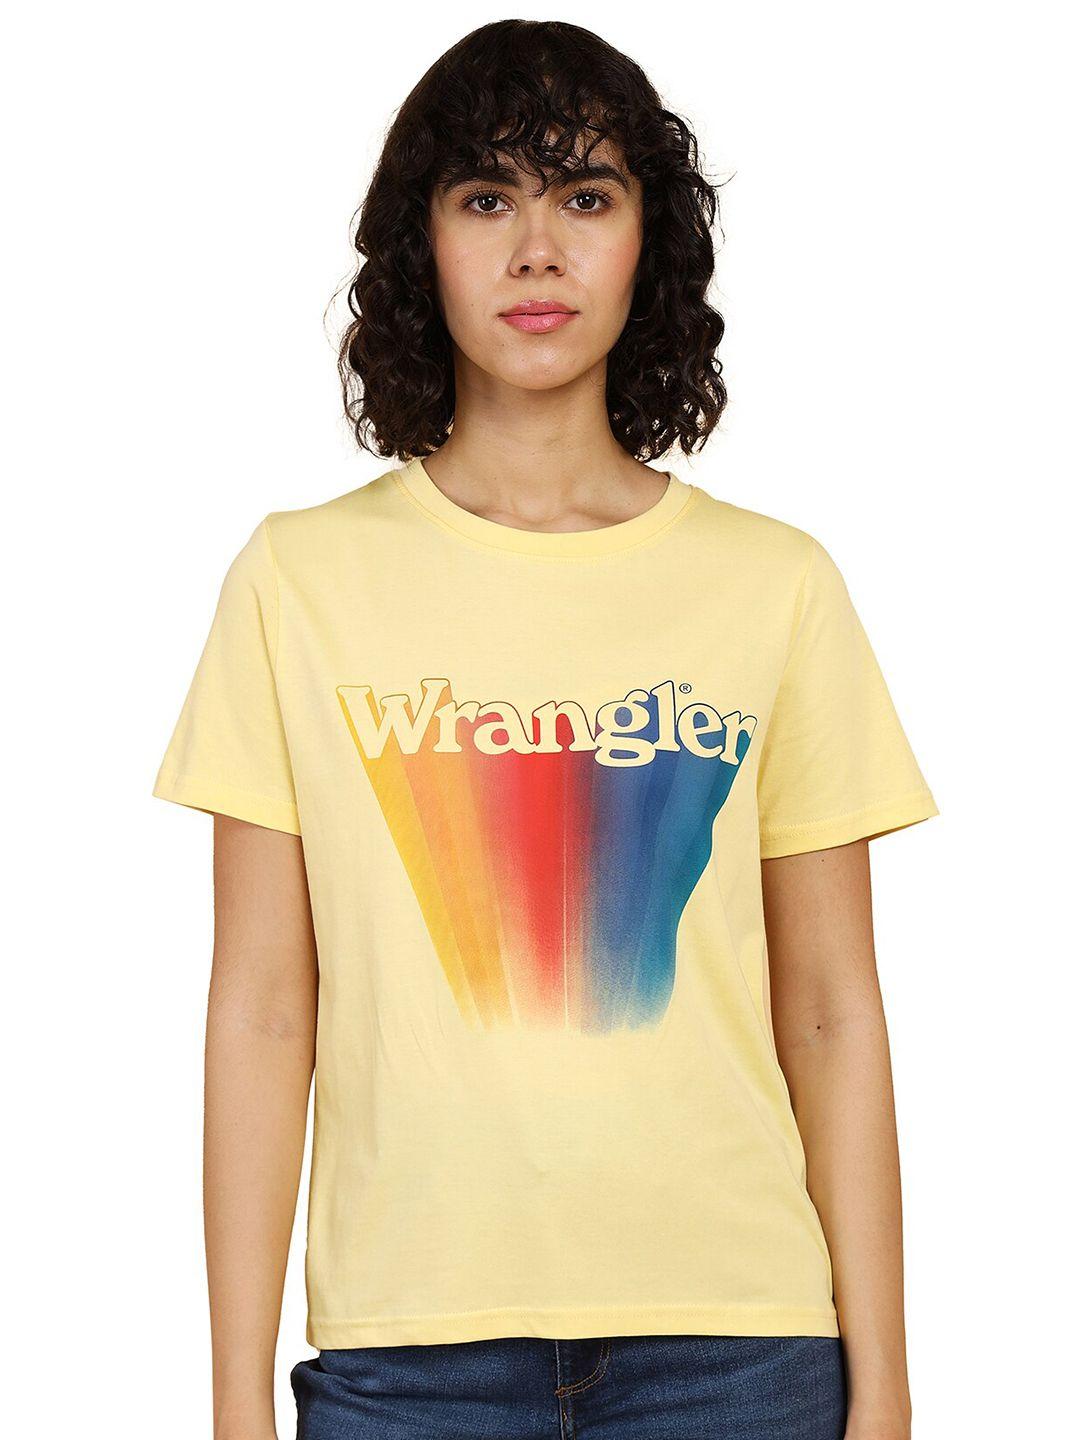 wrangler brand logo printed cotton t-shirt